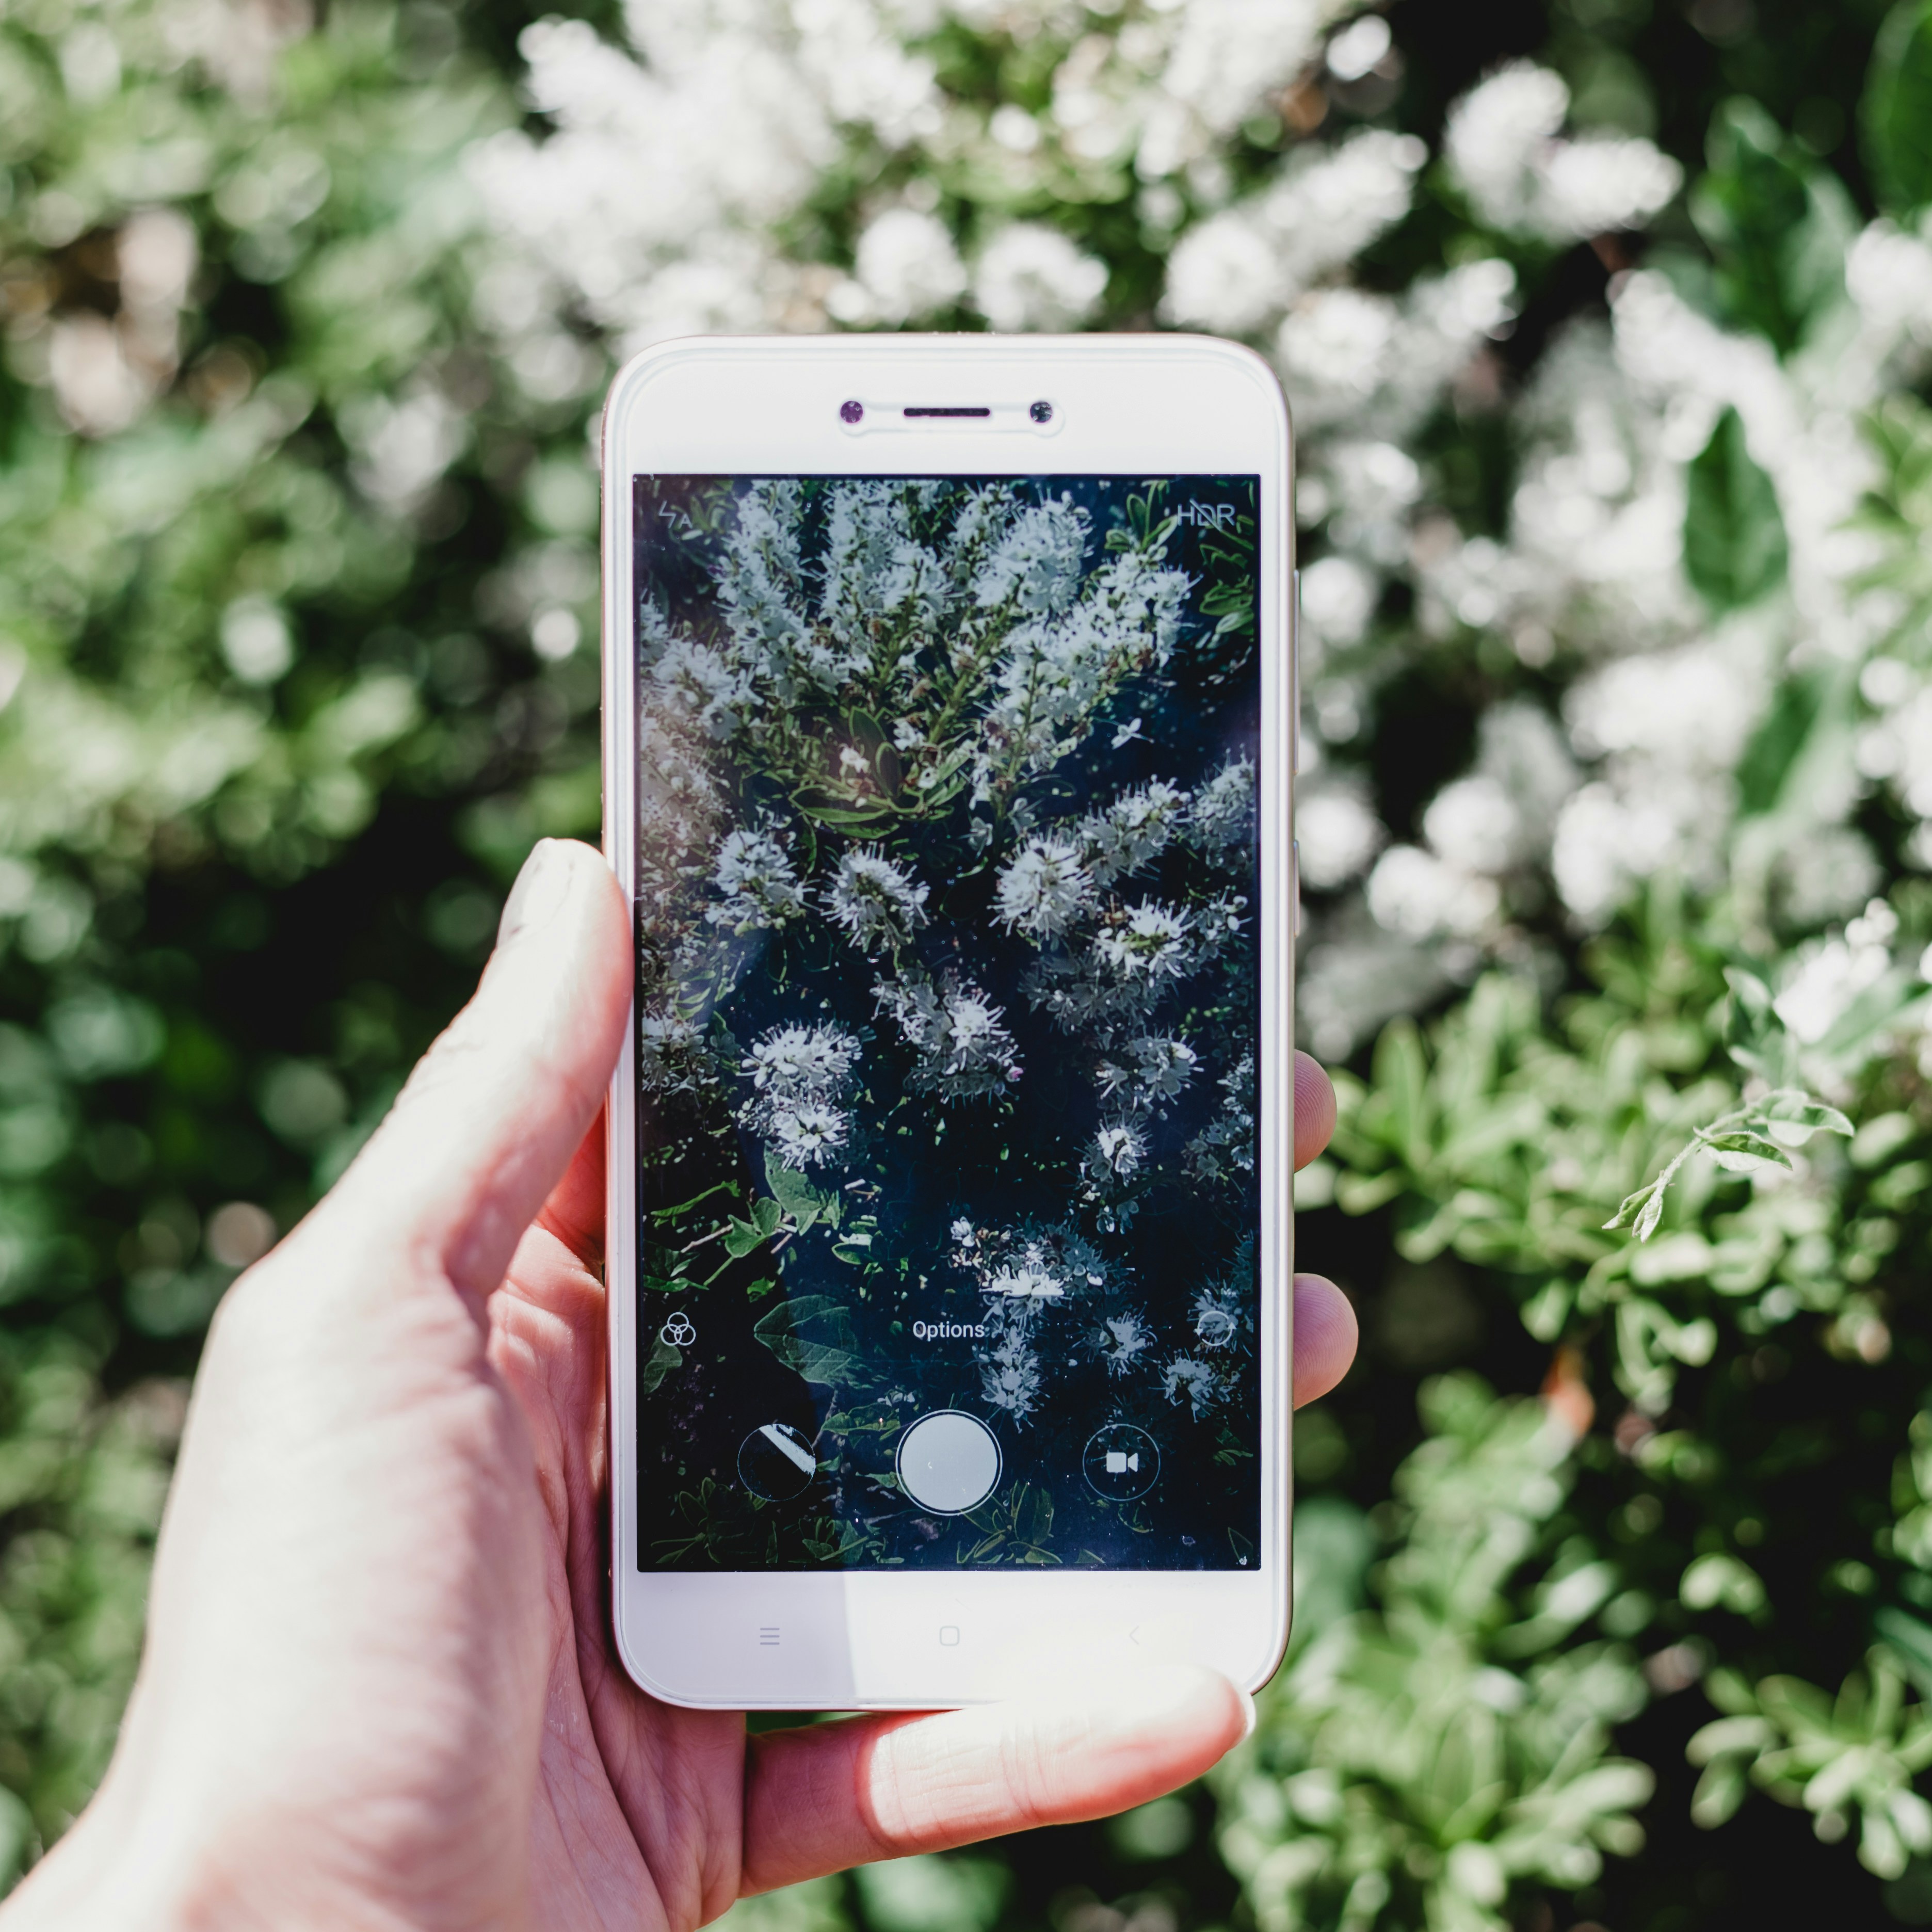 smartphone camera displaying plant